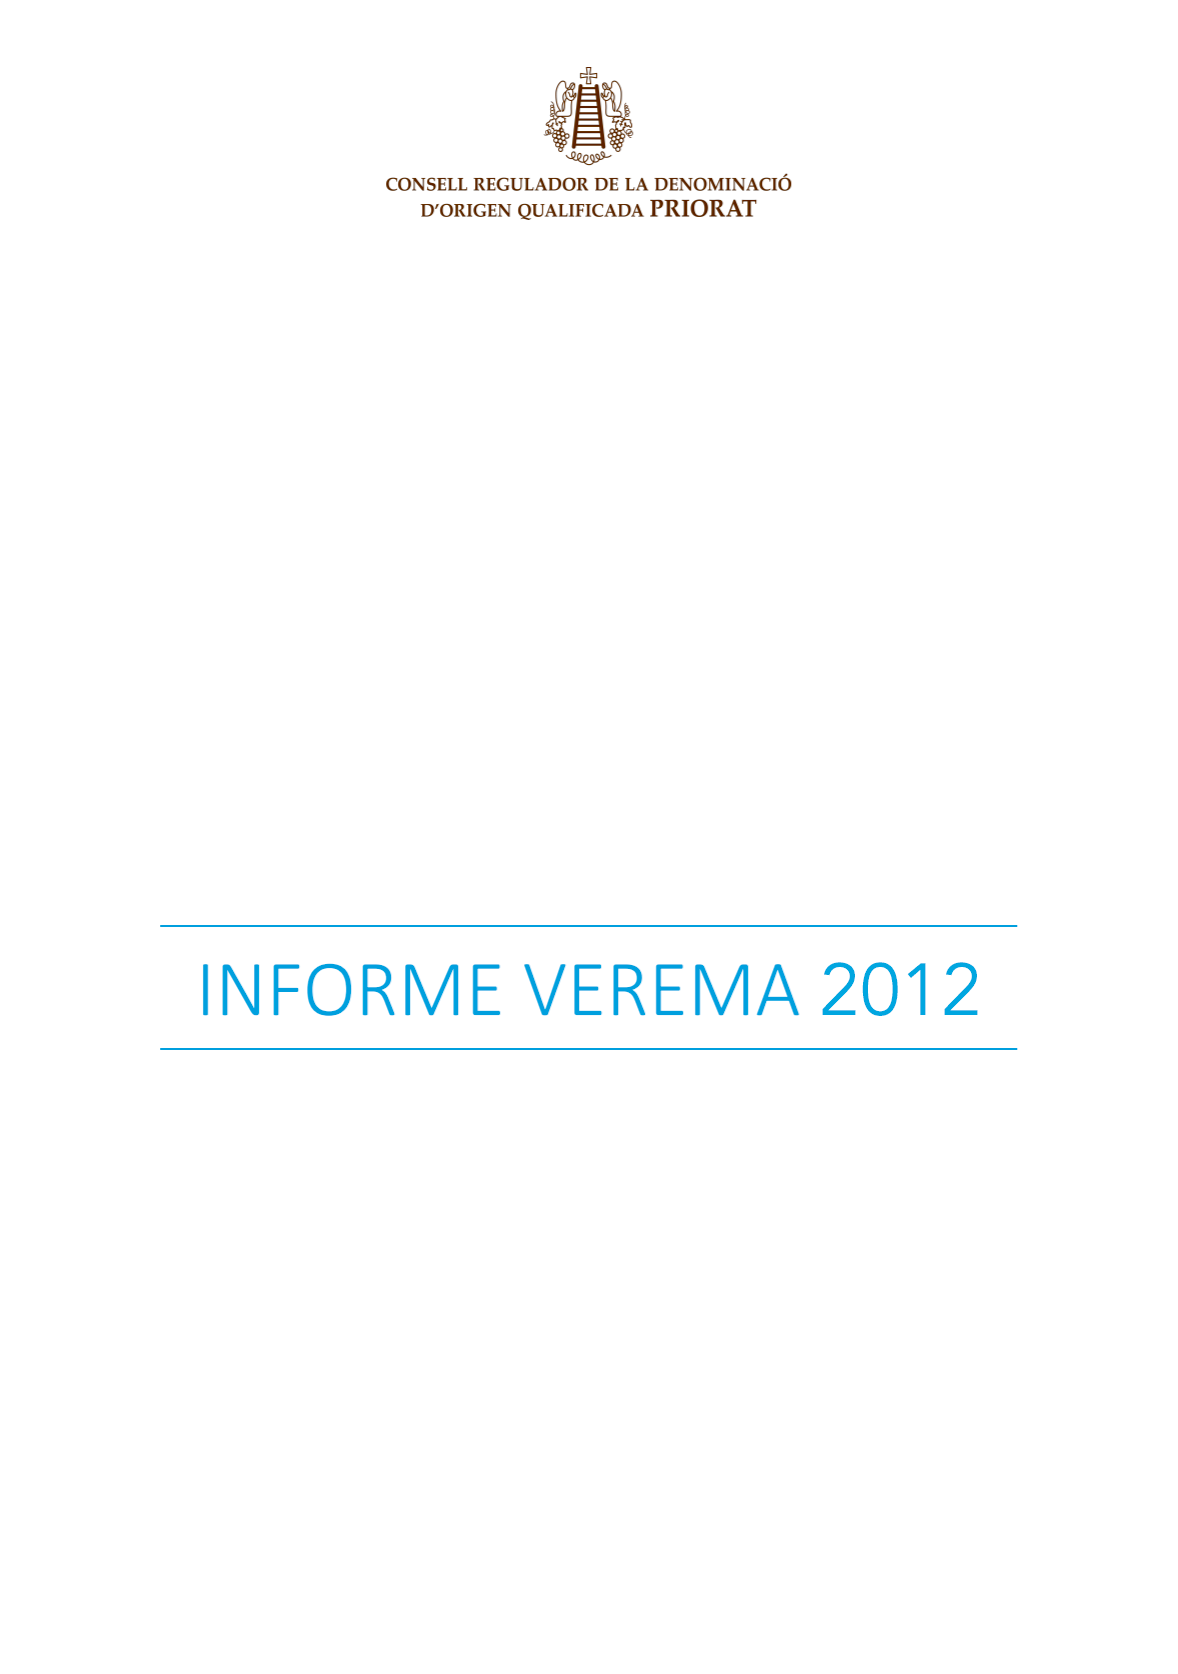 Informe de verema 2012